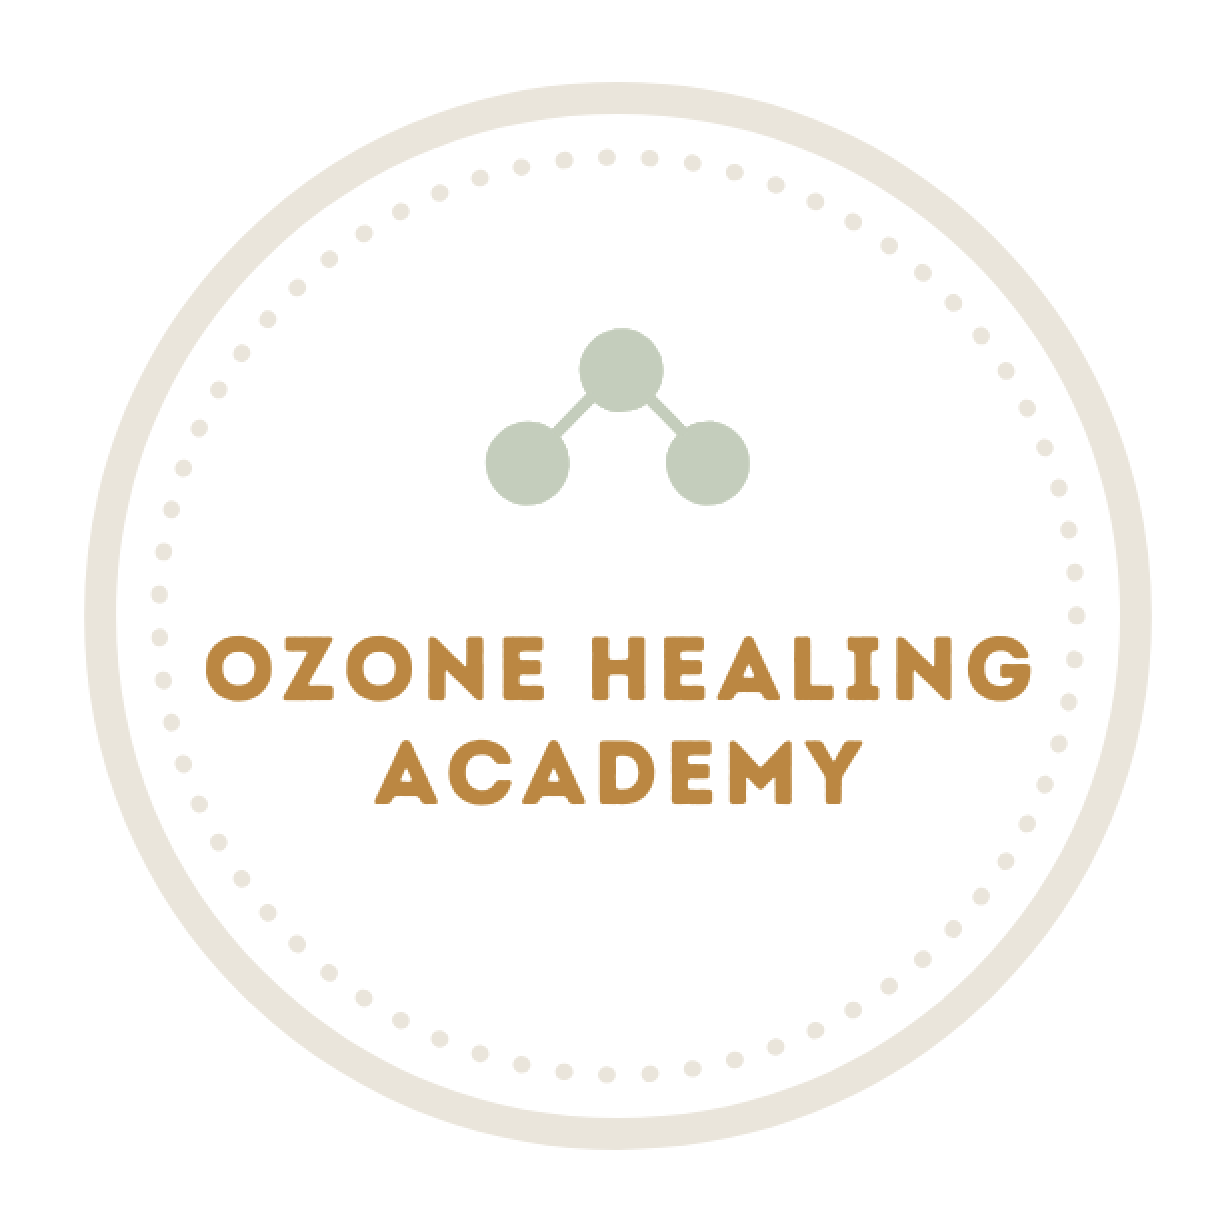 Ozone Healing Academy